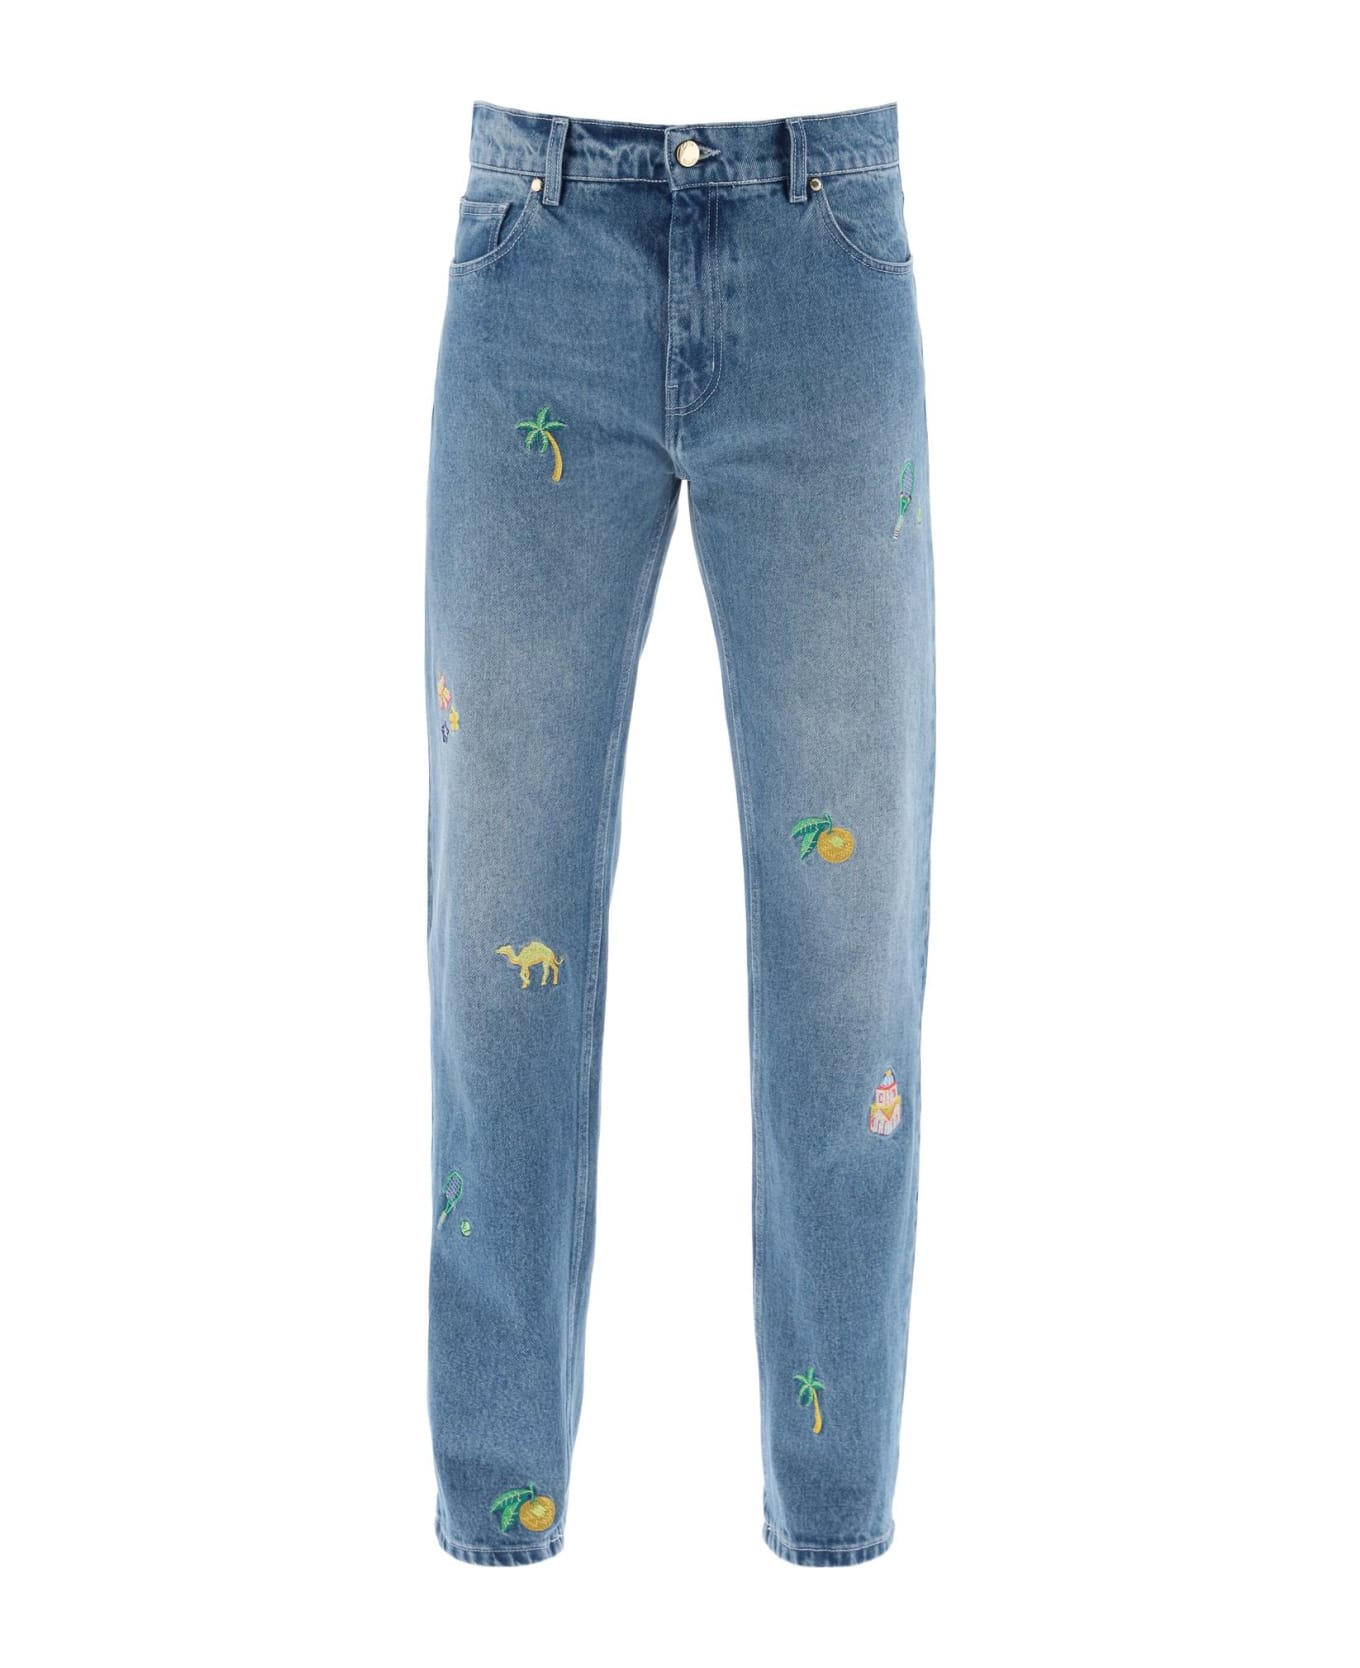 Casablanca Embroidered Straight Jeans - STONE WASH (Light blue) デニム